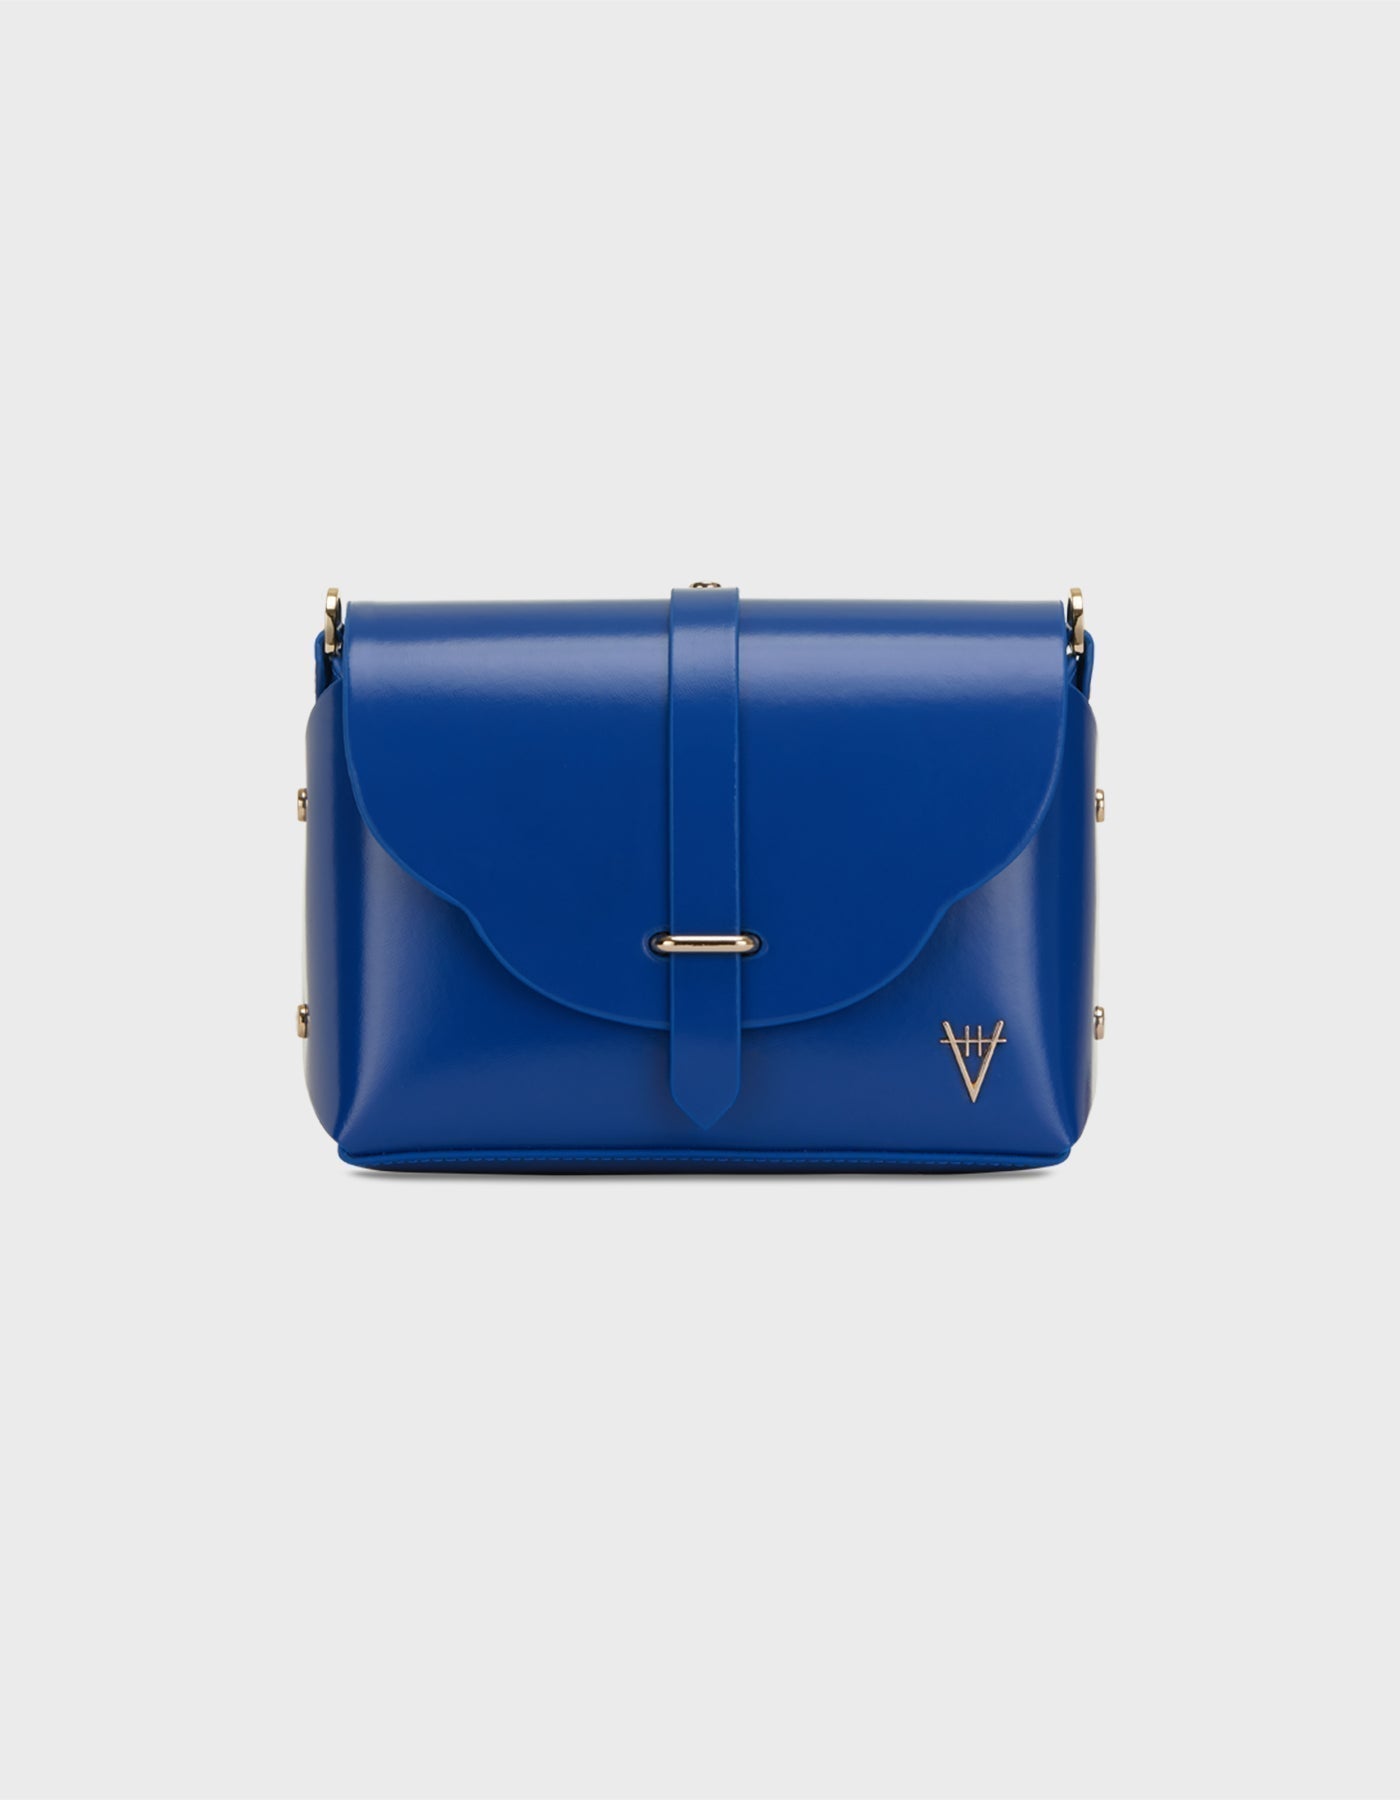 Hiva Atelier | Harmonia Shoulder Bag Sodalite Blue | Beautiful and Versatile